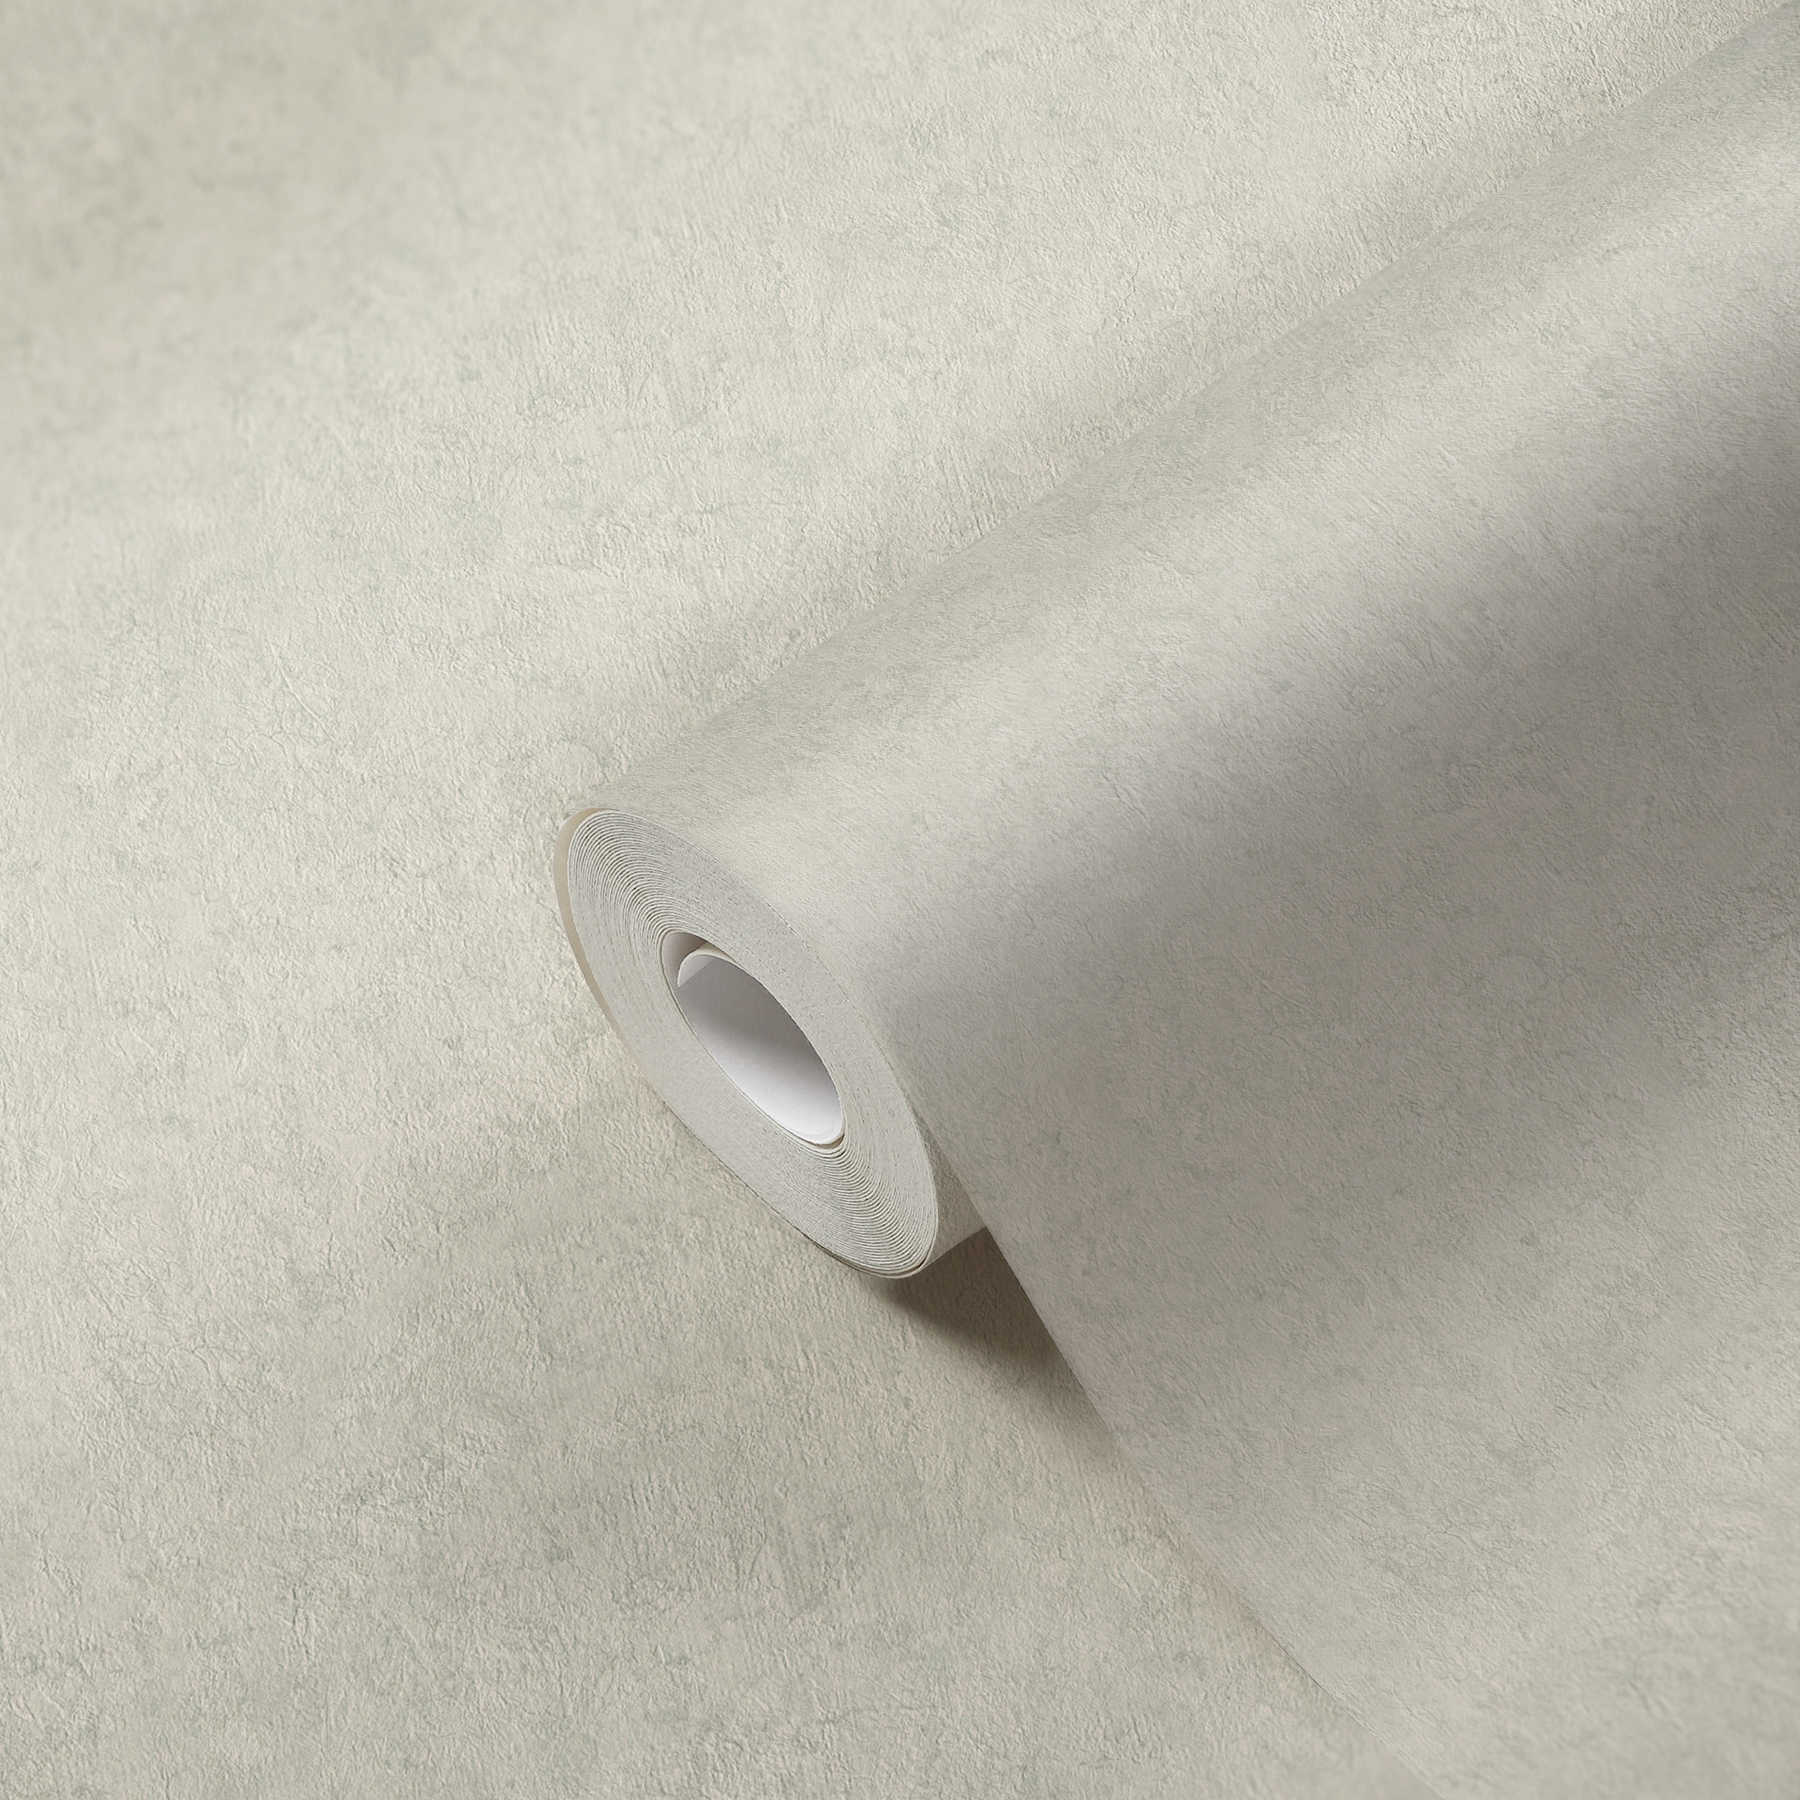             Vliesbehang effen neutraal unit behang zijde mat - grijs
        